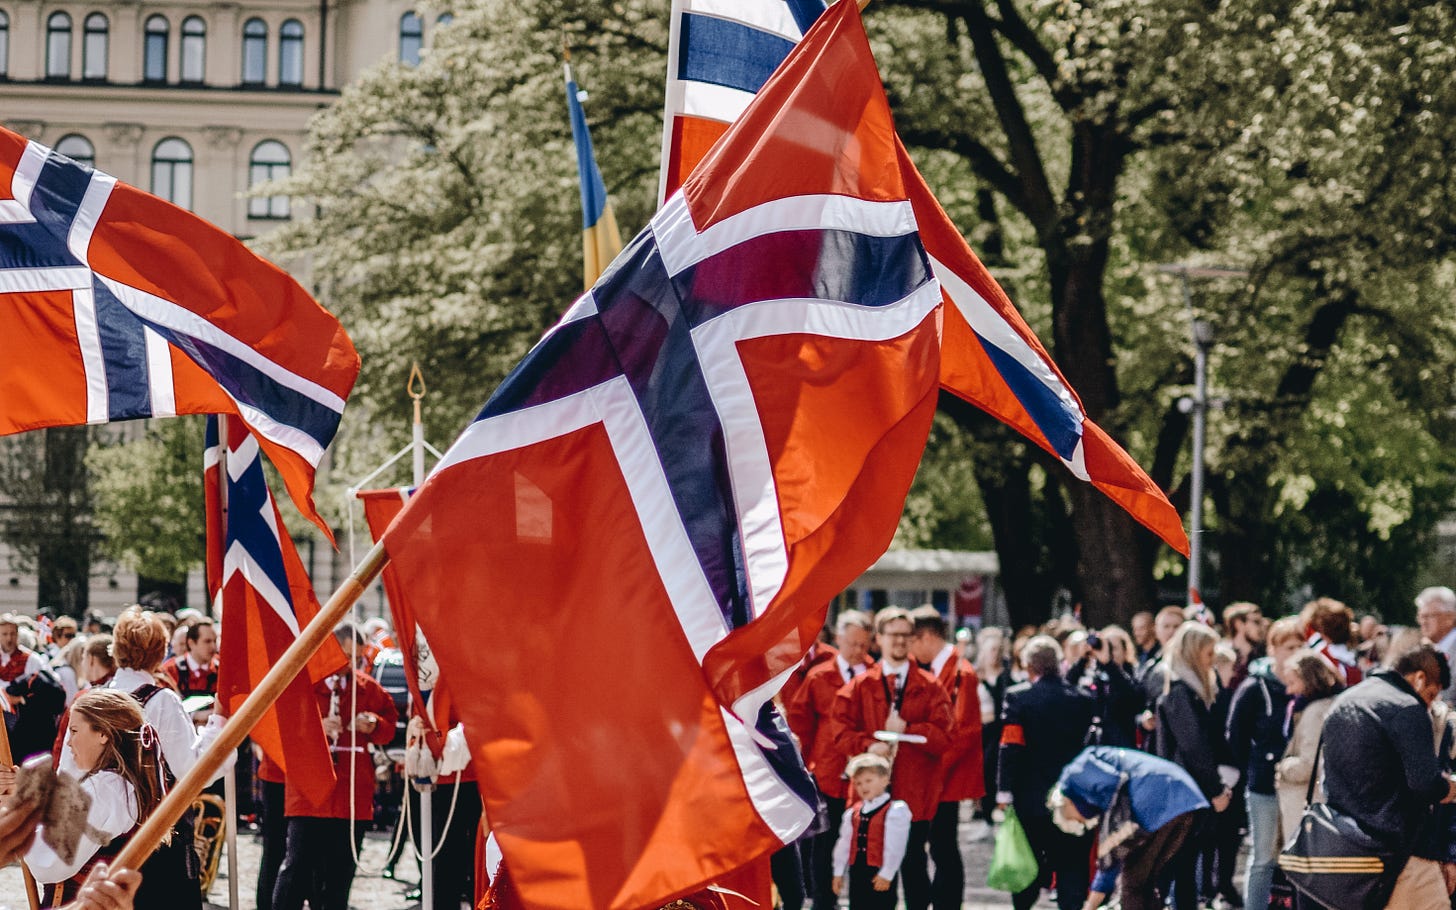 Norwegian Constitution Day